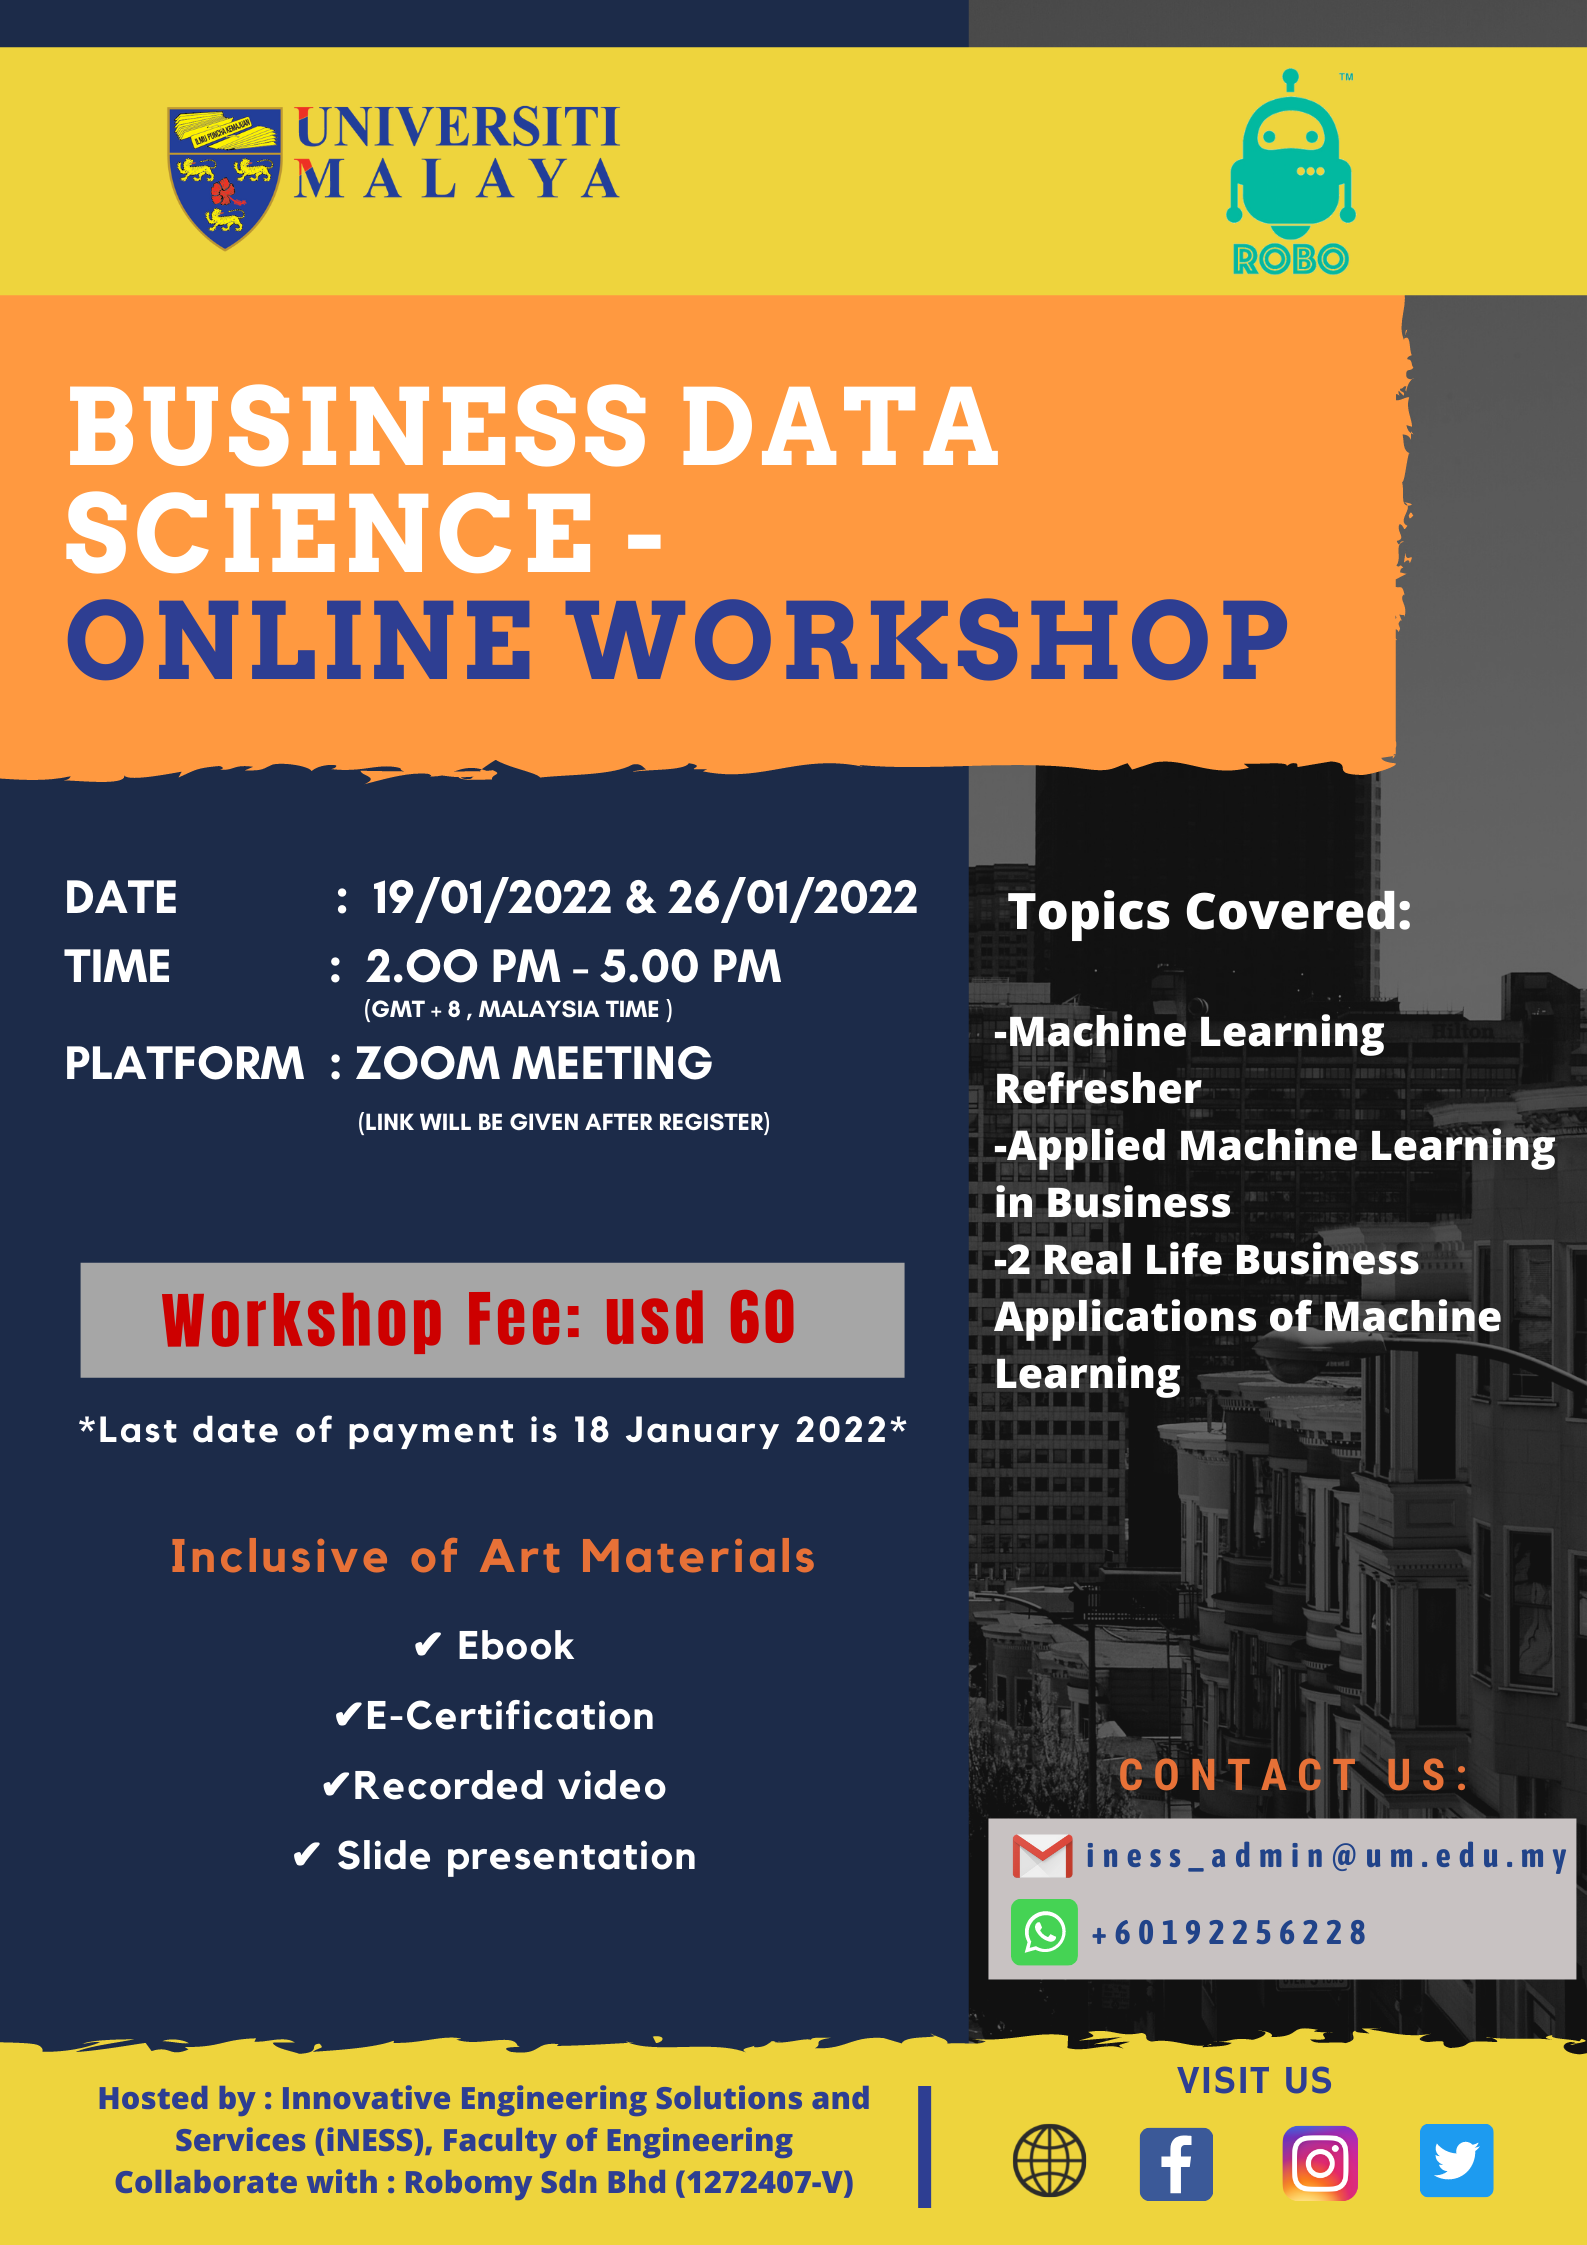 Invitation to 2-Days Business Data Science Online Workshop by Universiti Malaya